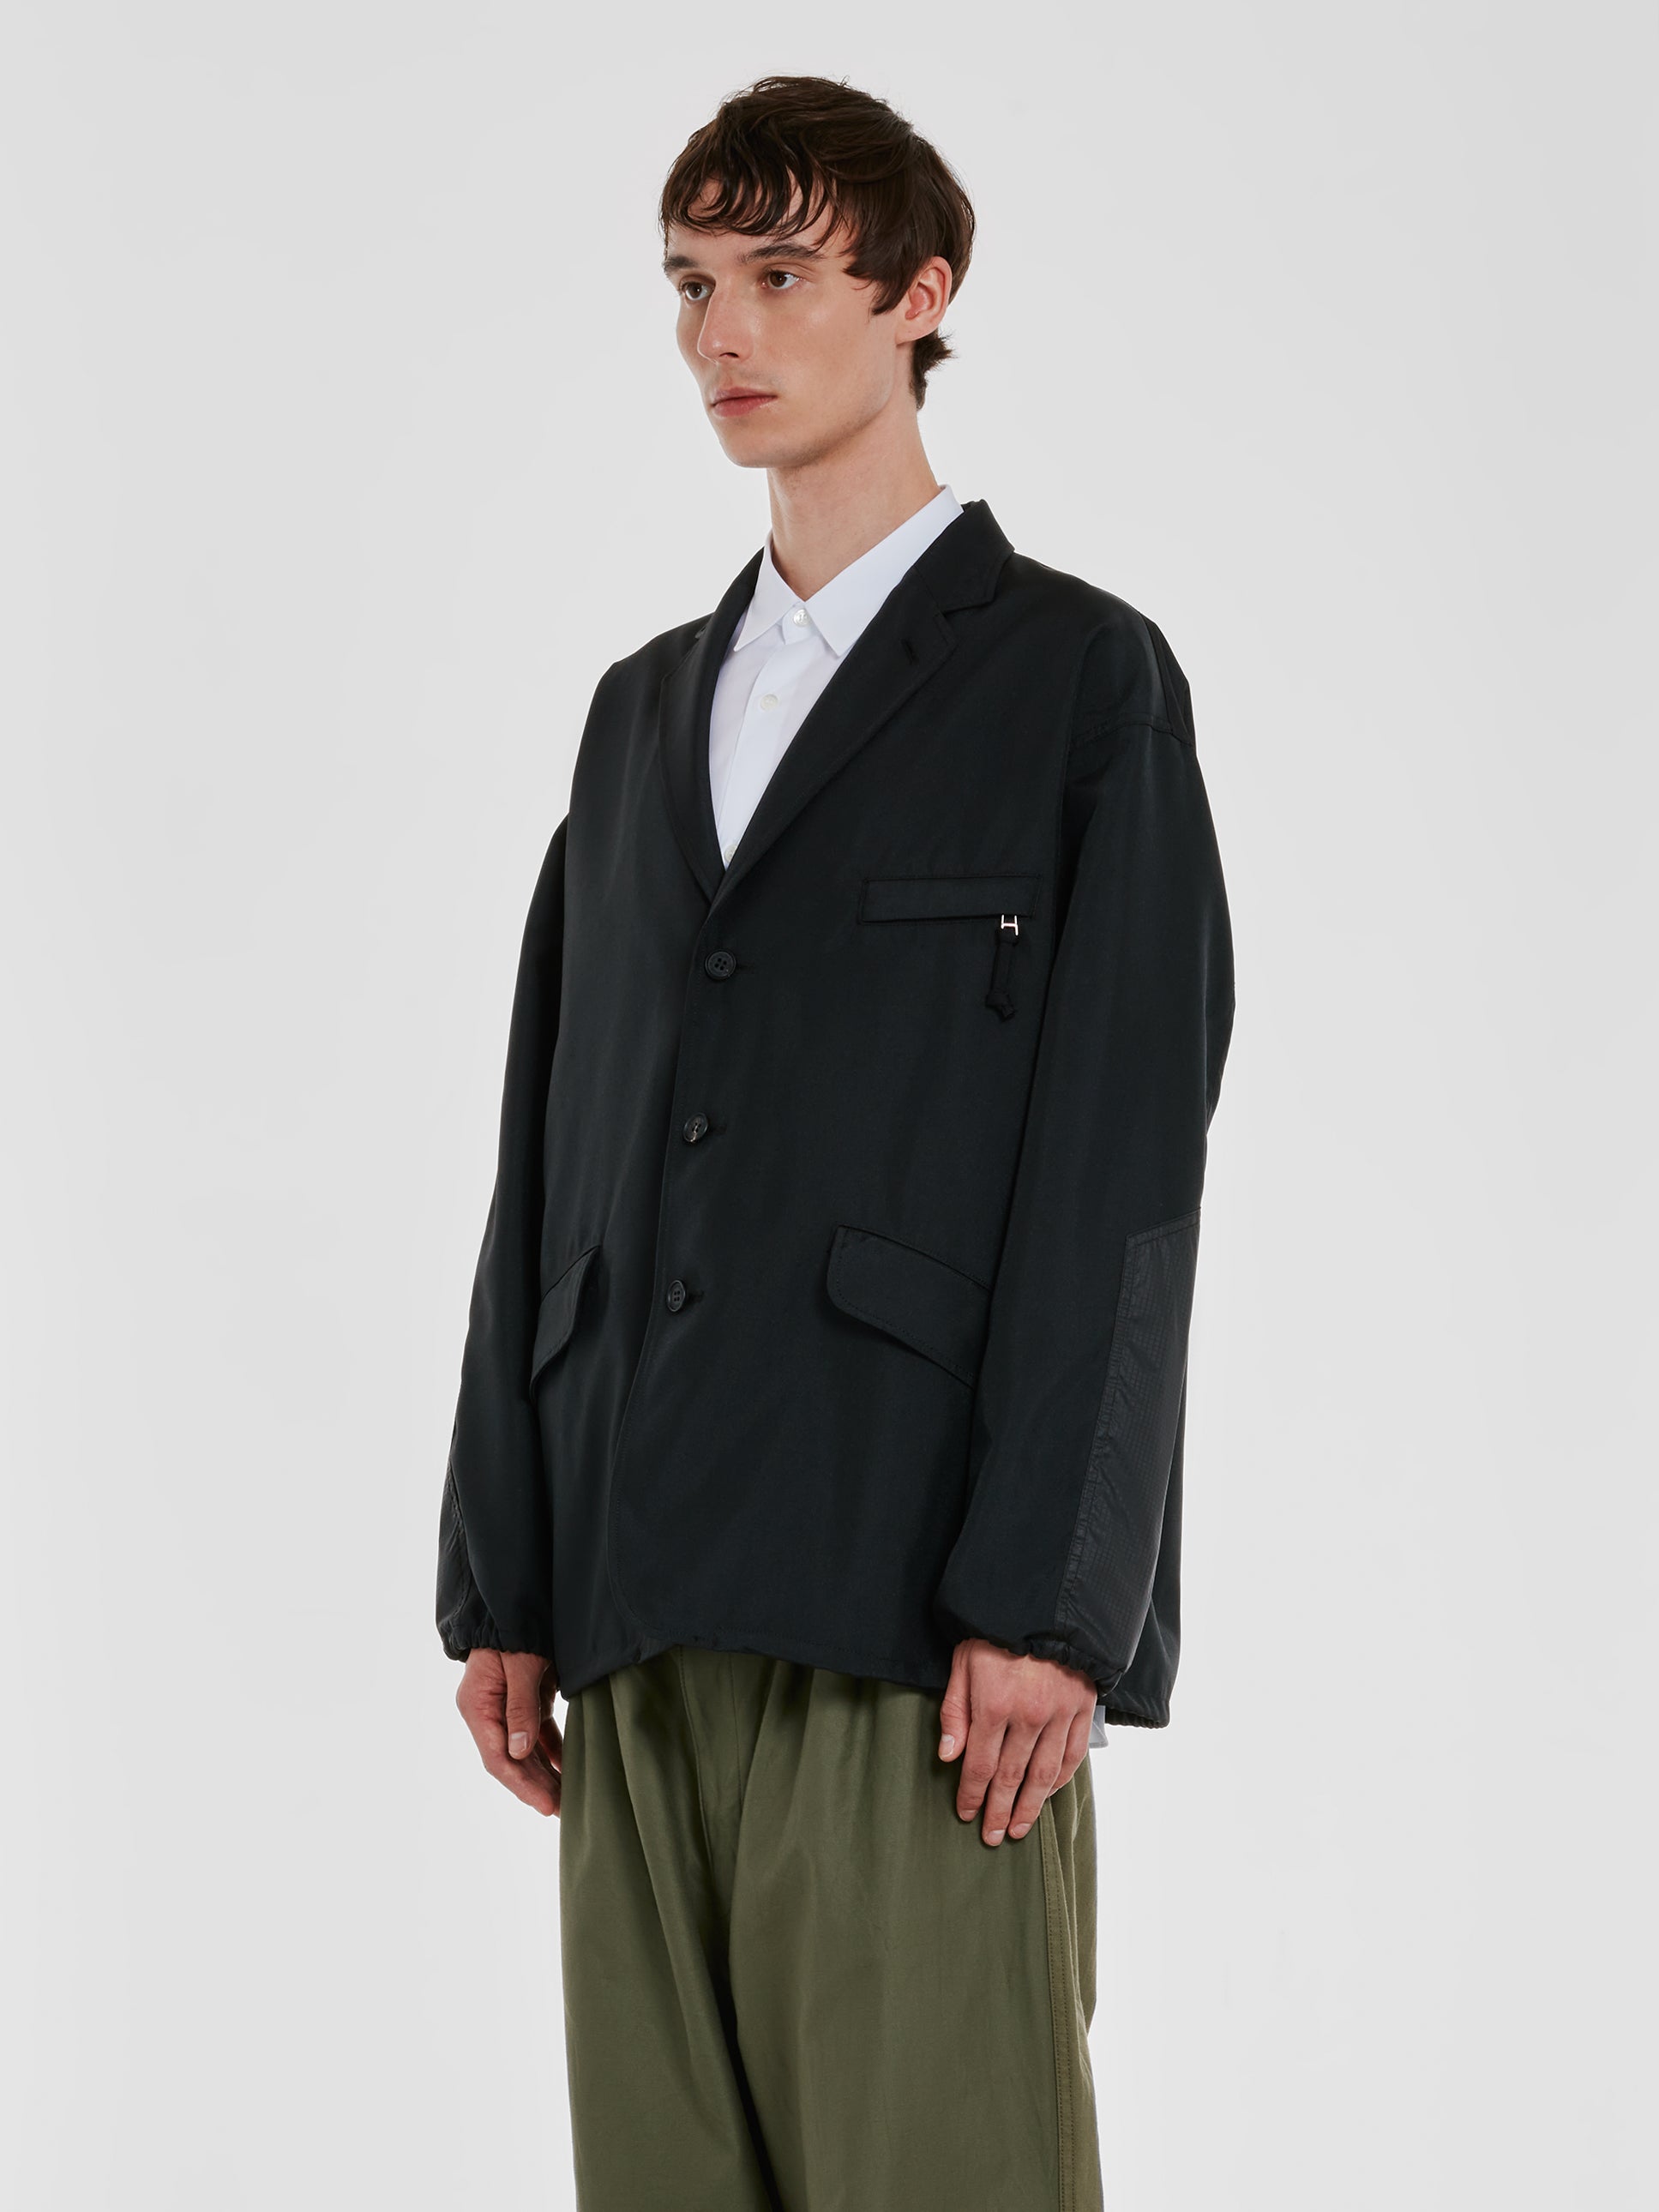 Comme des Garçons Homme - Men’s Polyester Relaxed Jacket - (Black) view 2